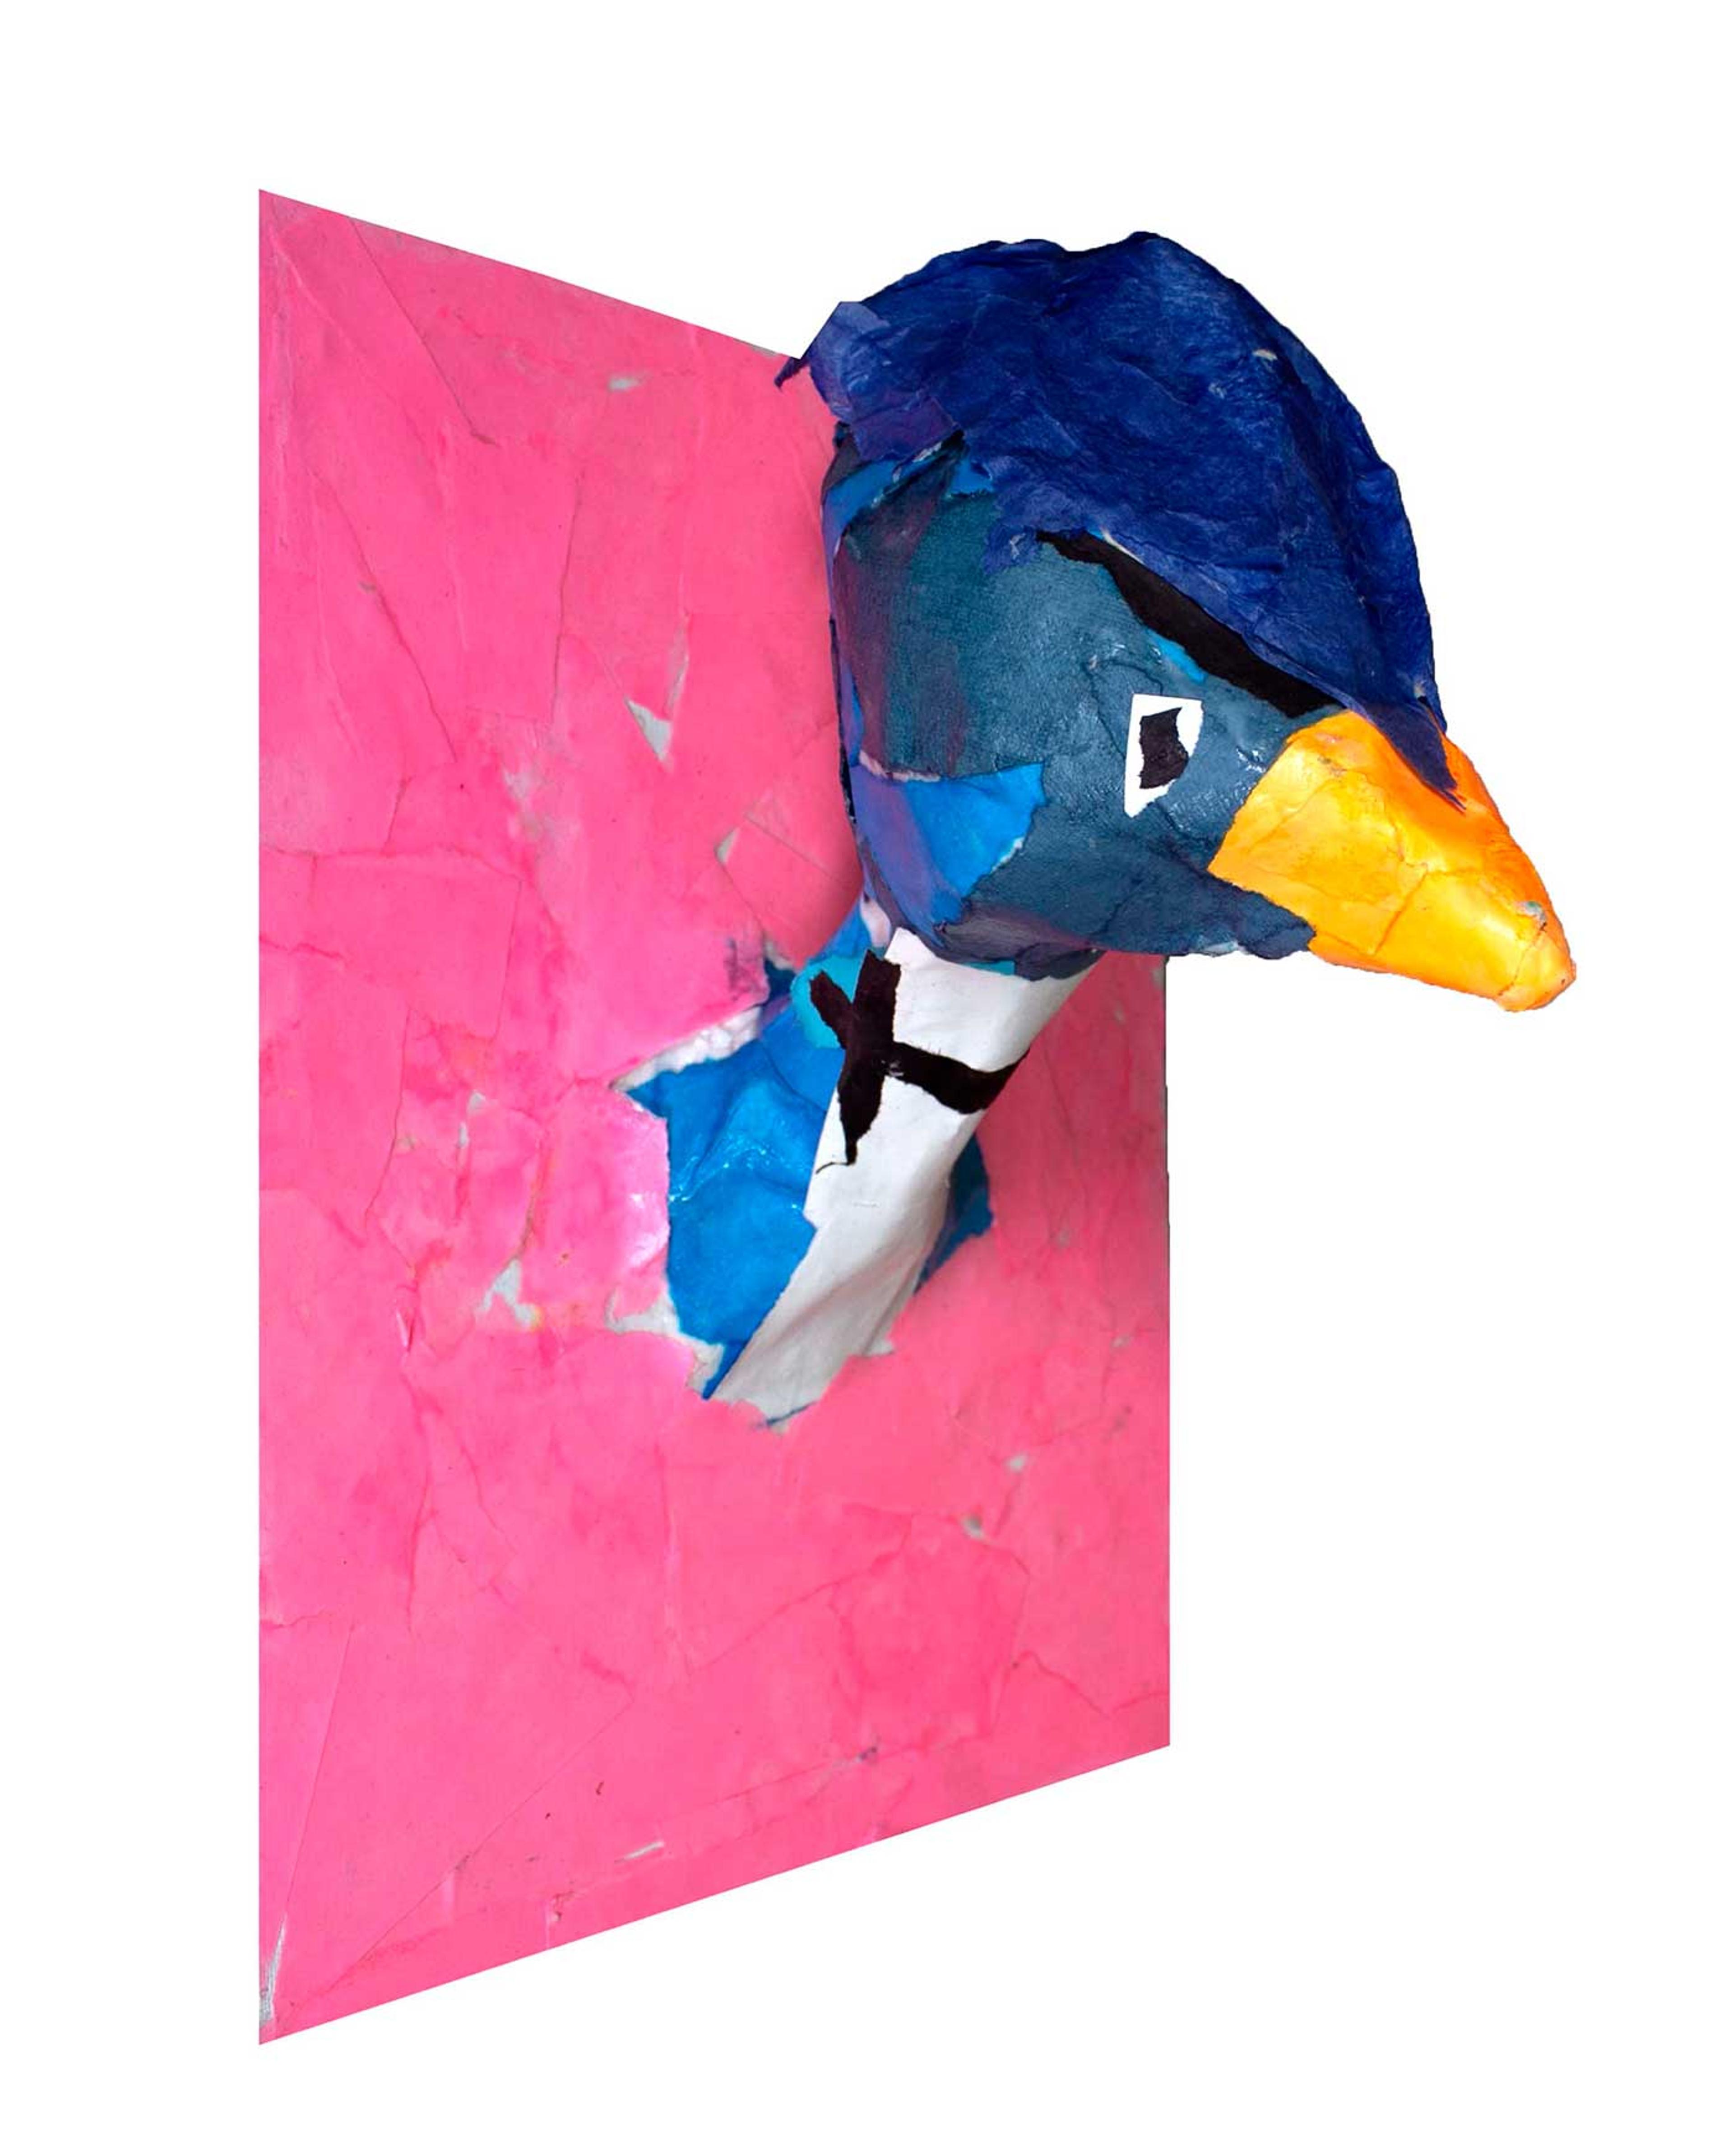 Three dimensional blue bird's head on pink paper.